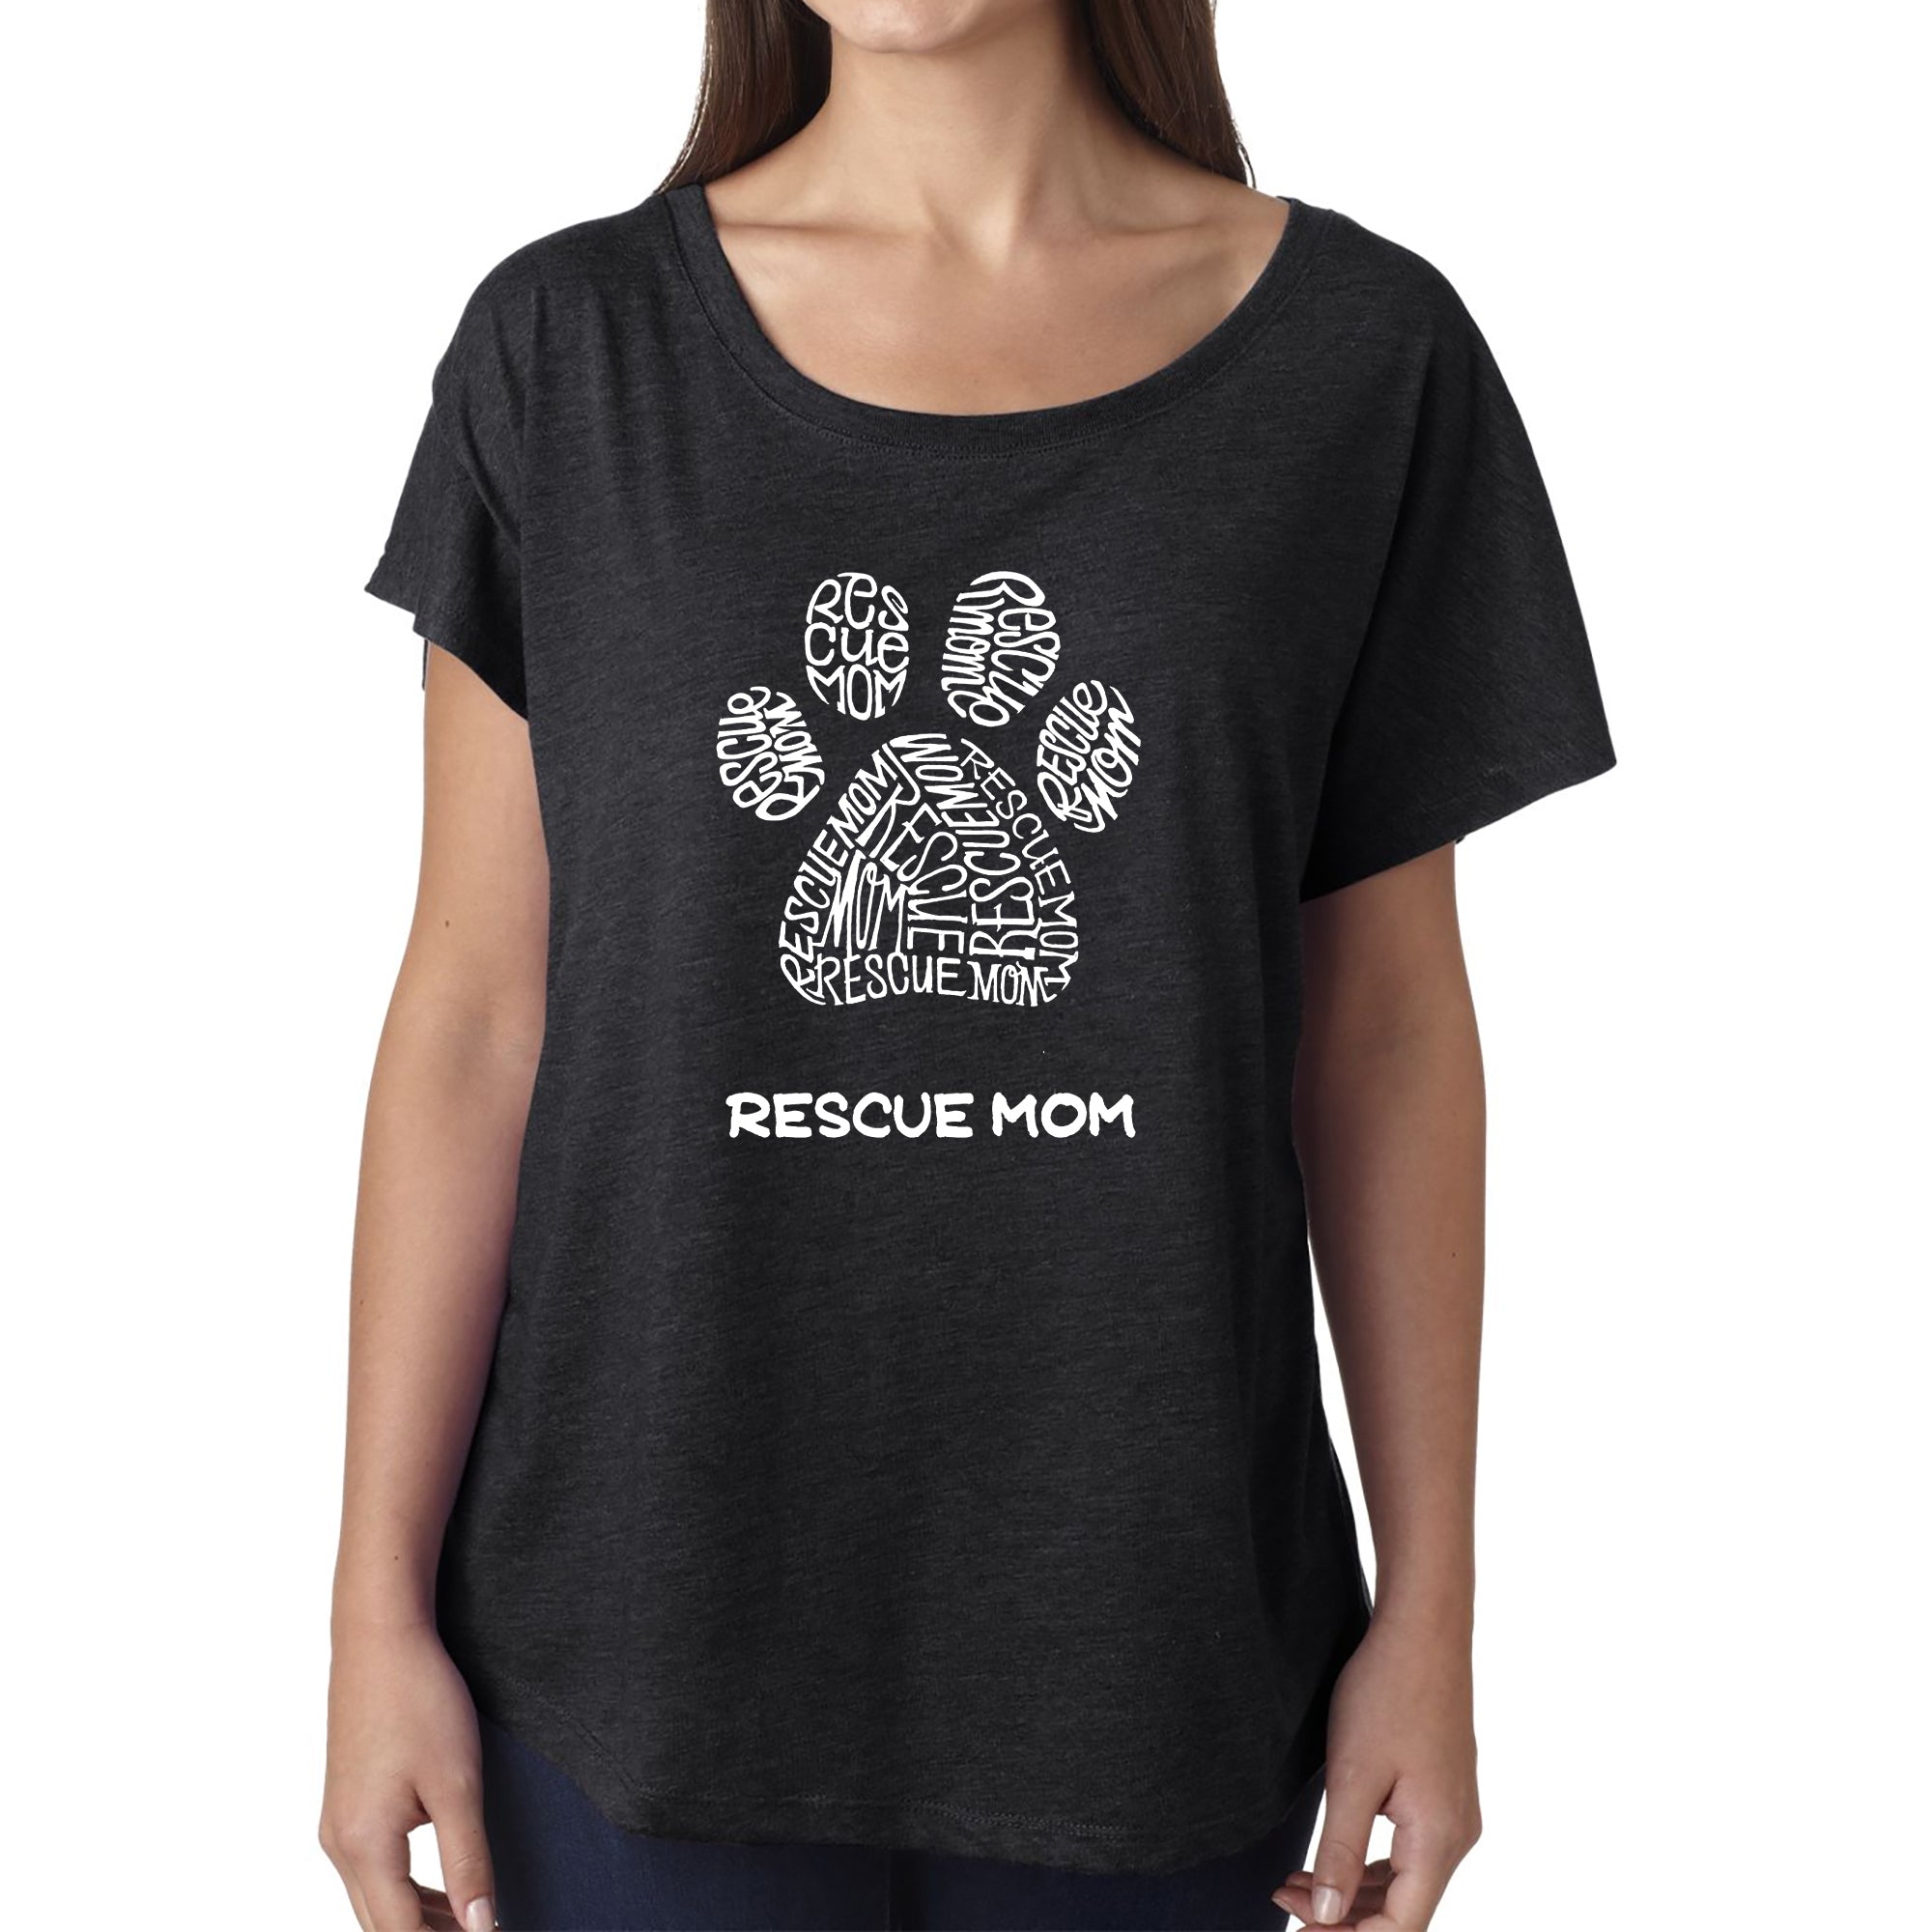 Rescue Mom - Women's Loose Fit Dolman Cut Word Art Shirt - Black - Small